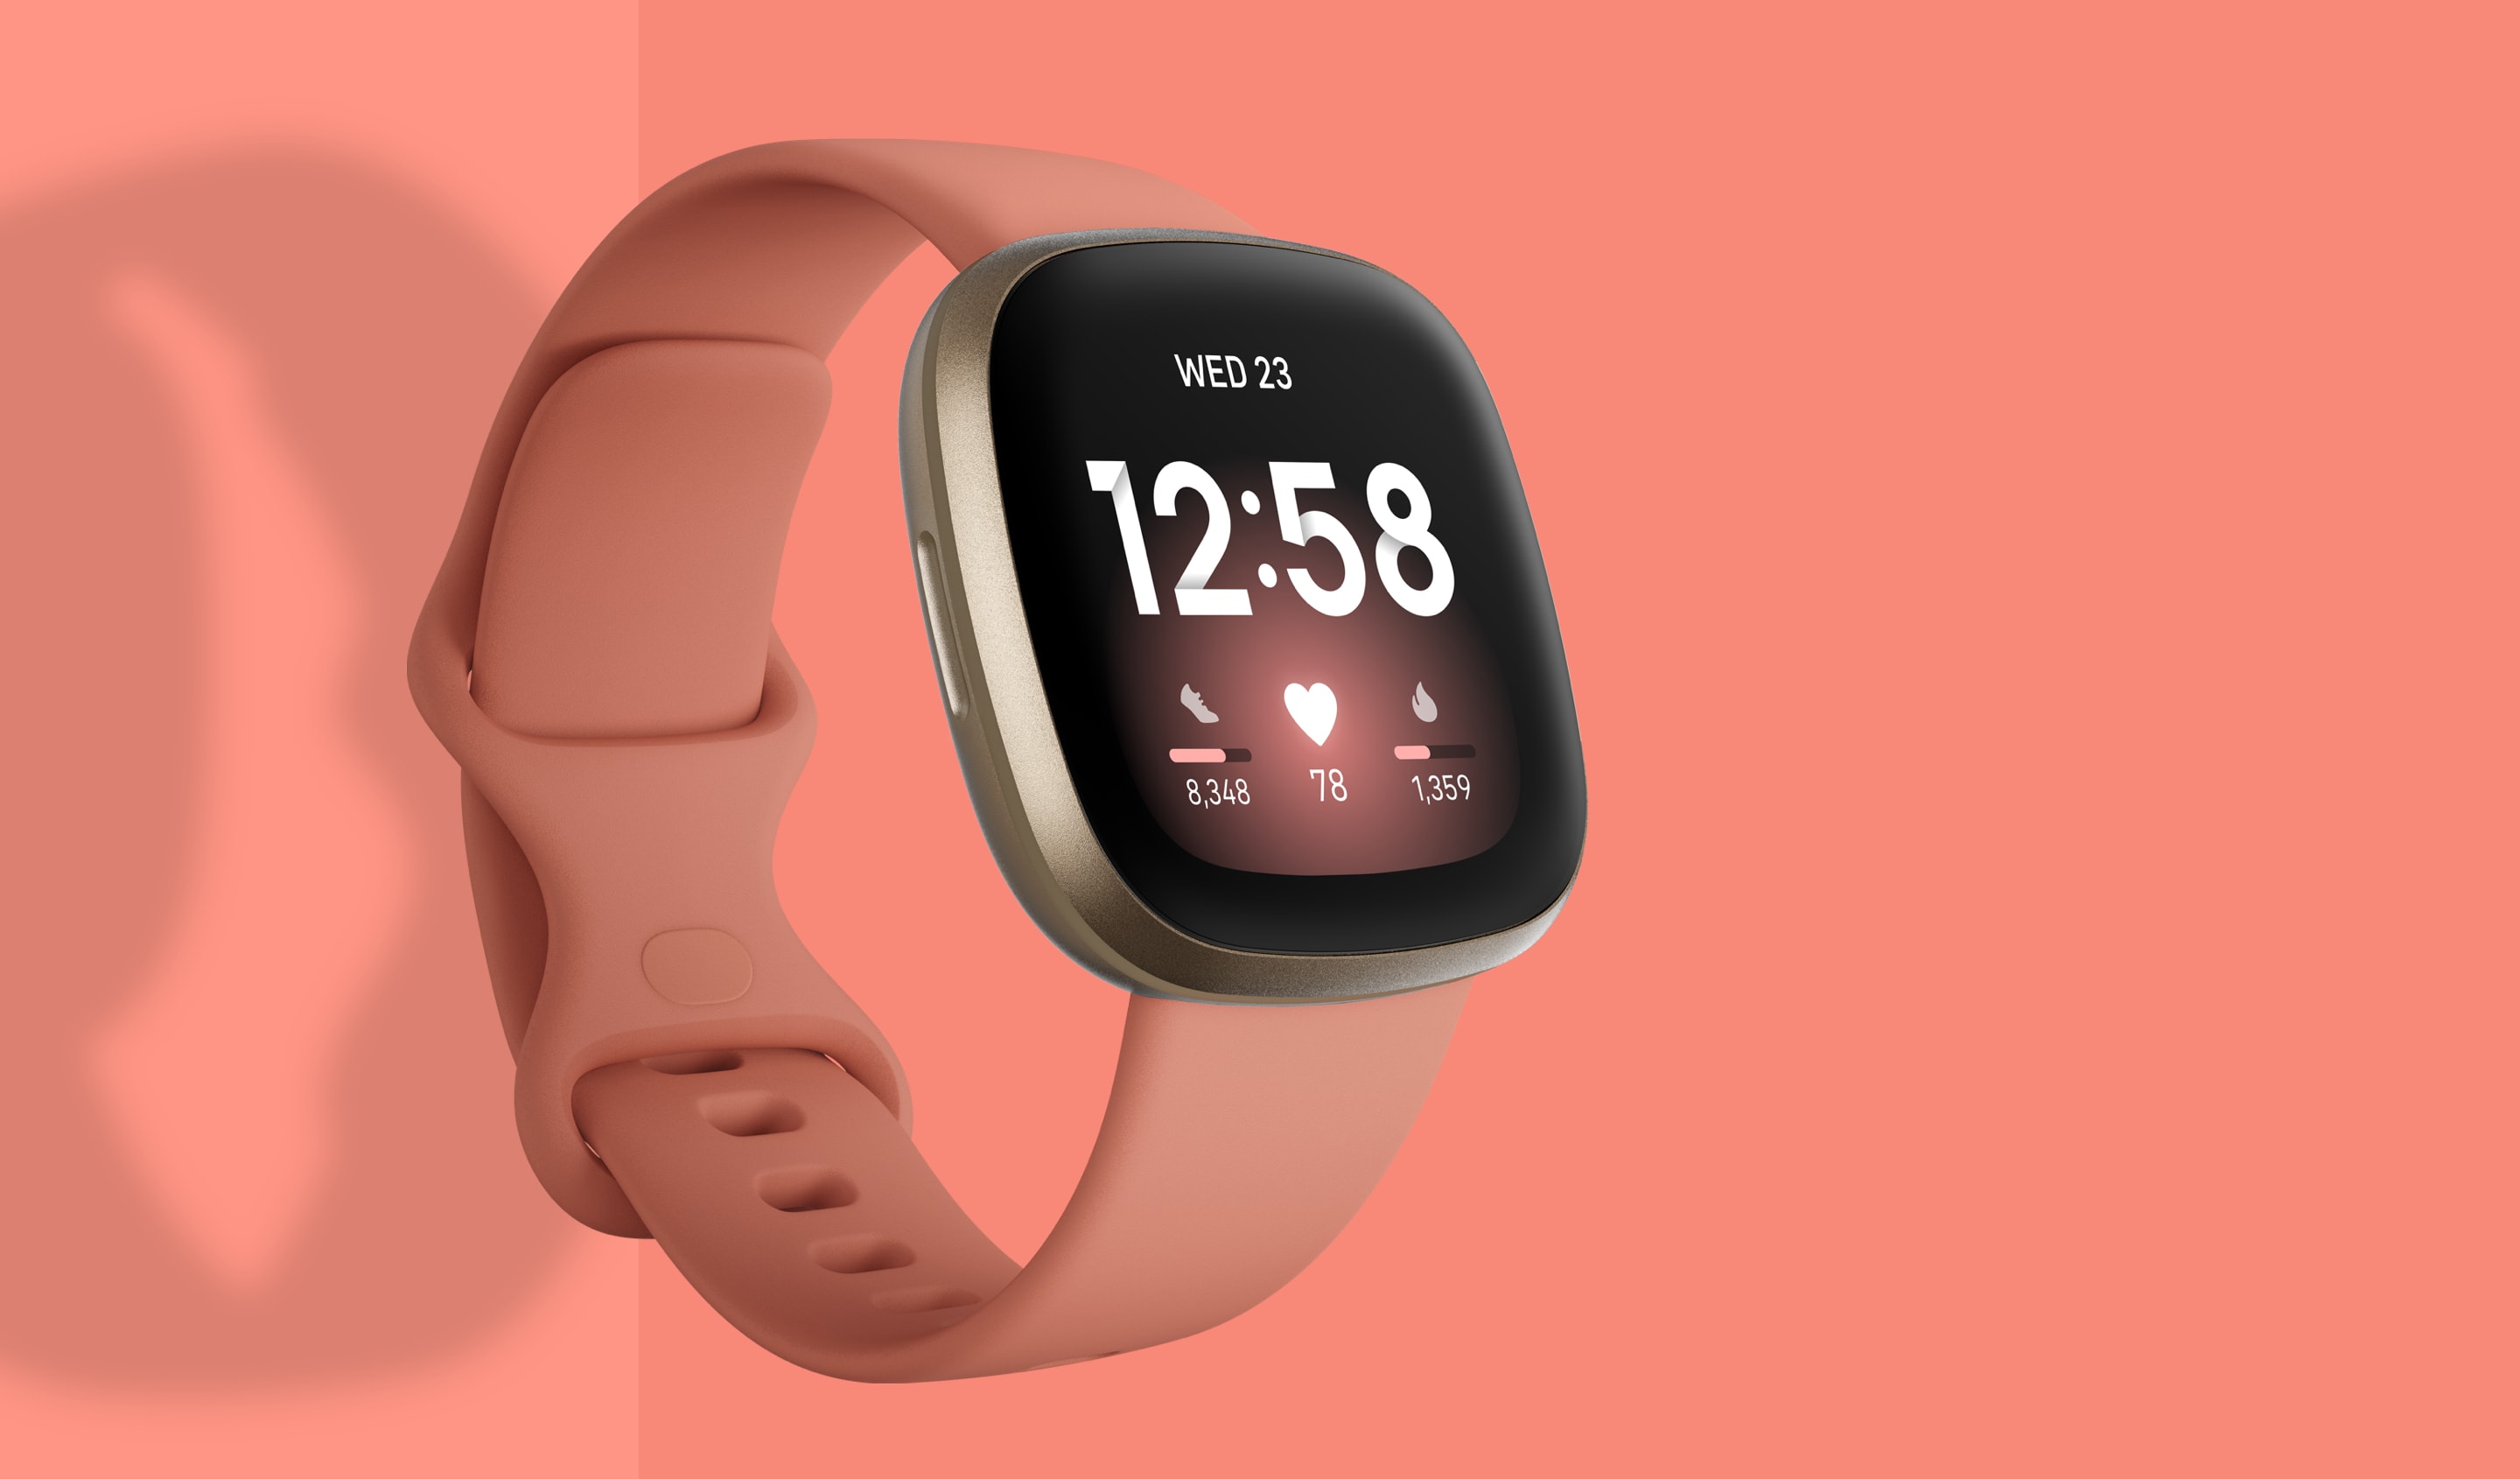 Versa 3 smartwatch from Fitbit